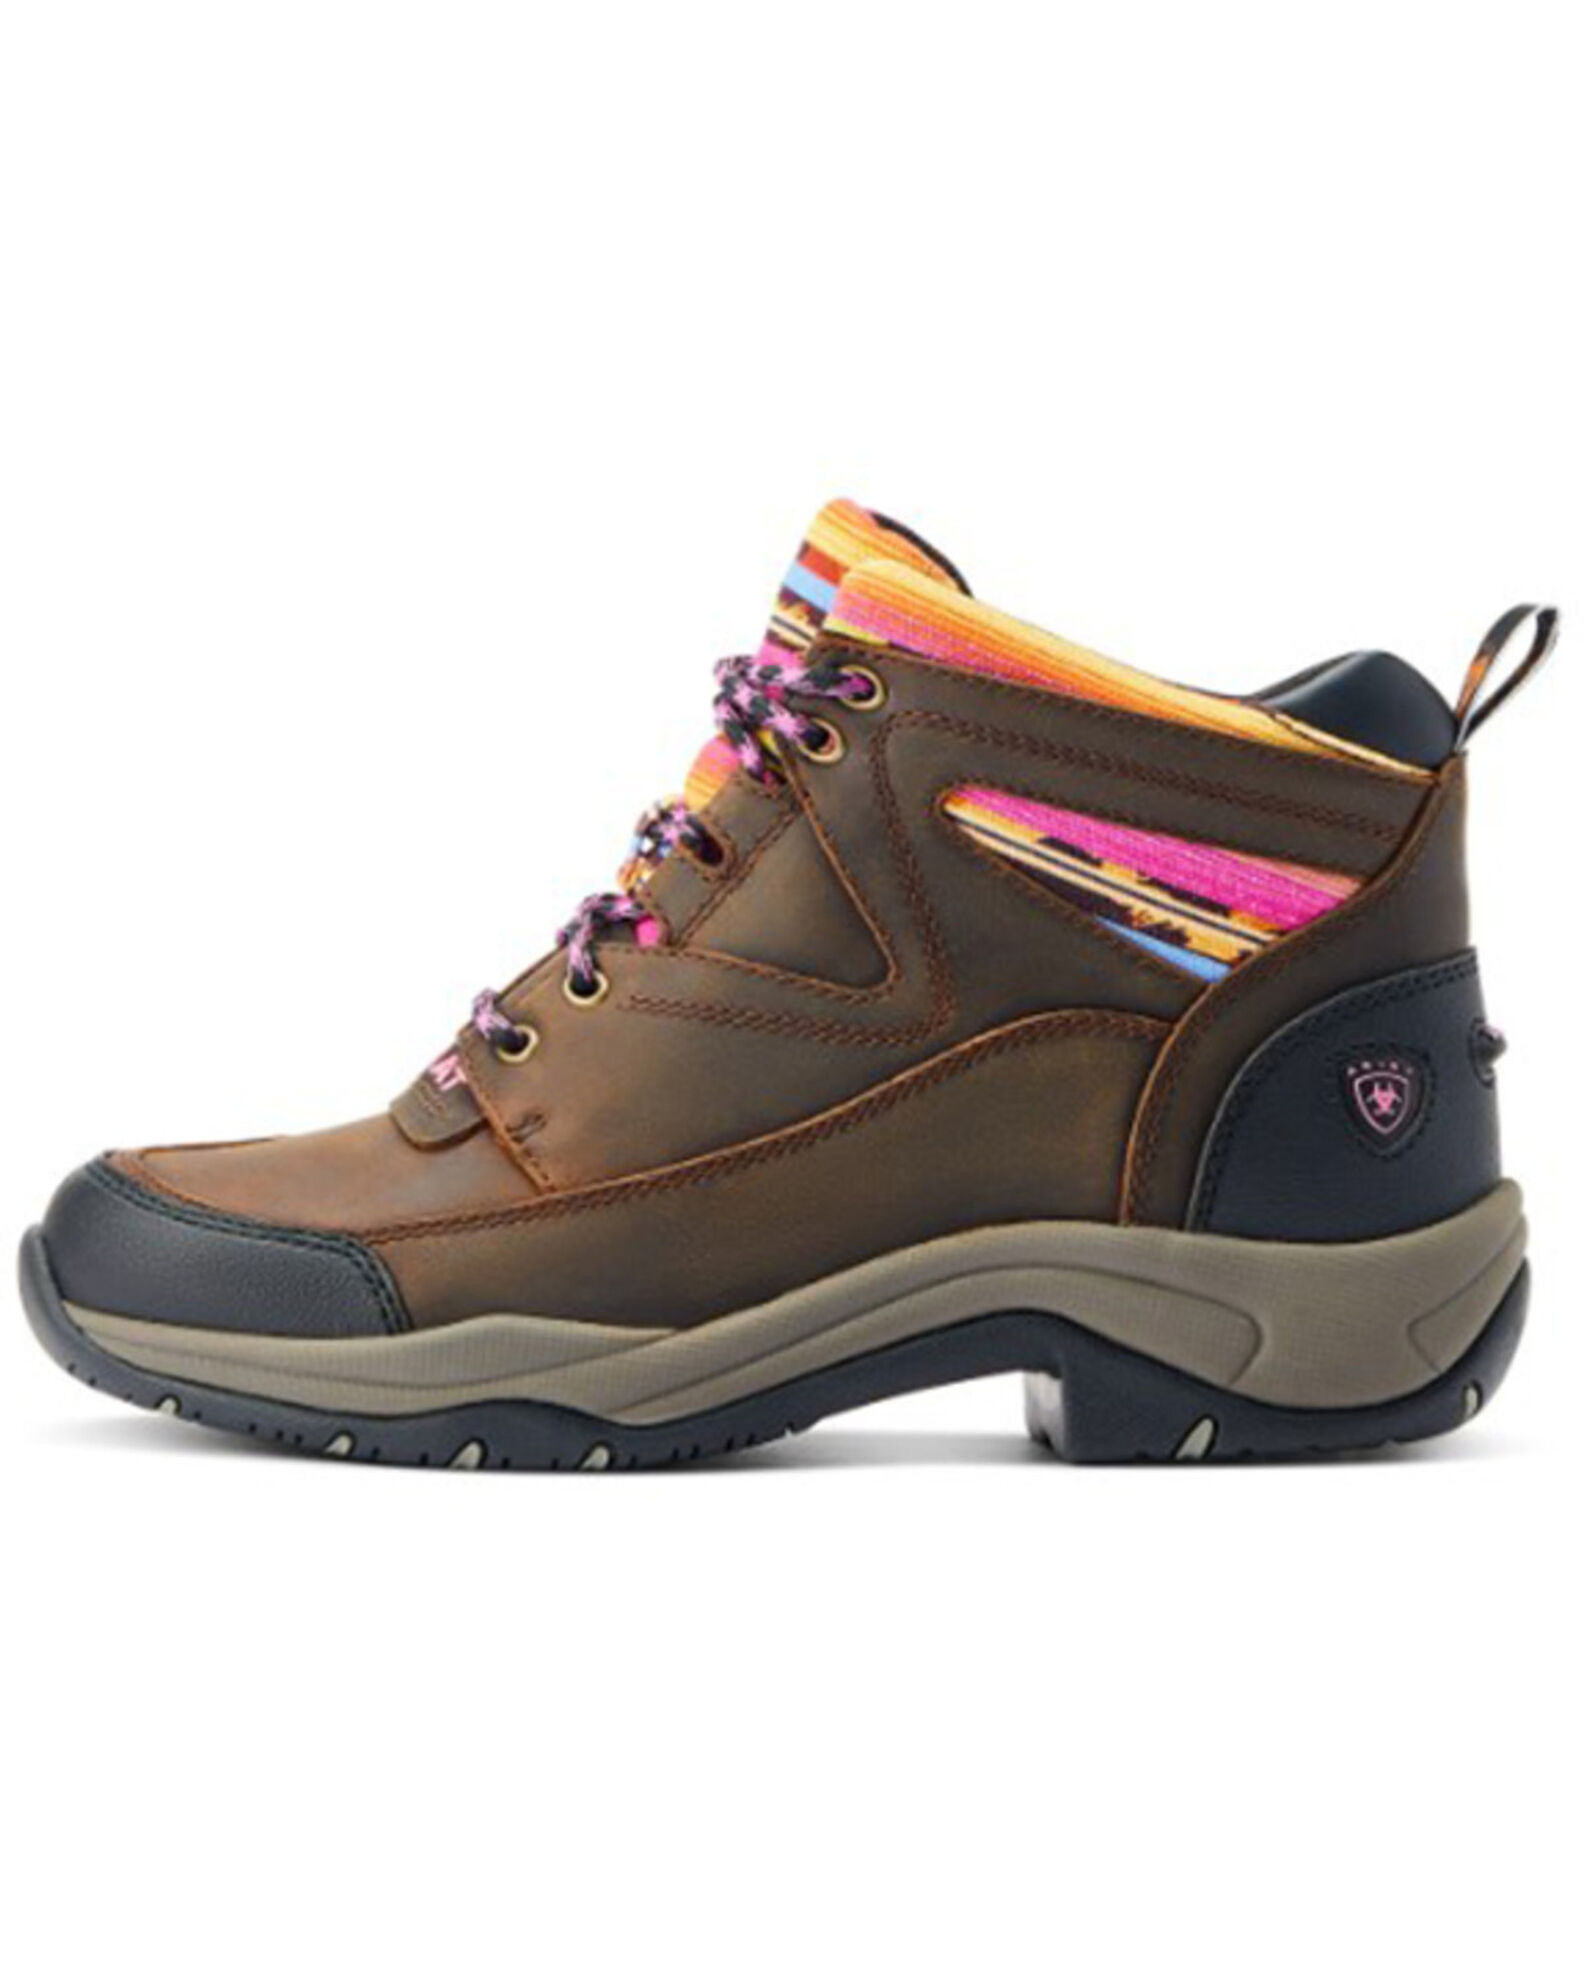 Product Name: Ariat Women's Serape Terrain Boots - Round Toe